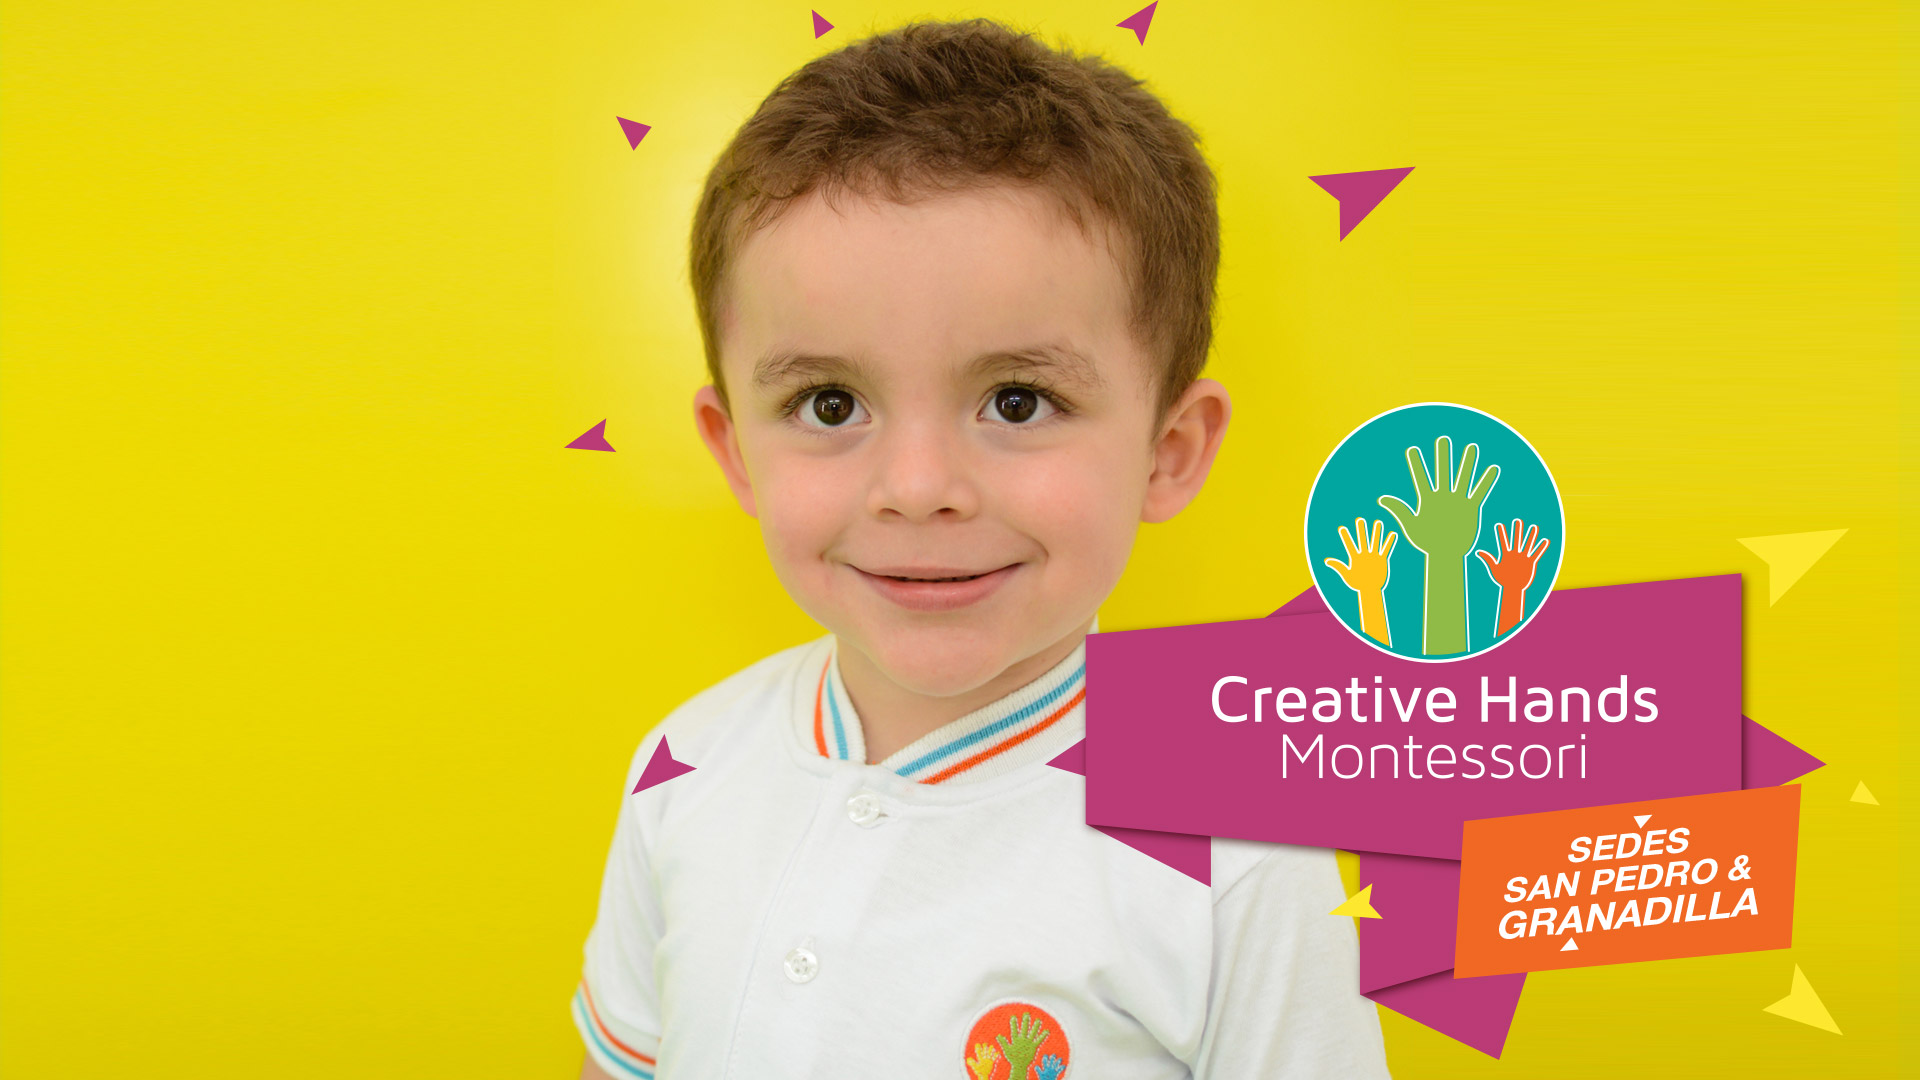 Creative Hands Montessori Kinder and Day Care Costa Rica